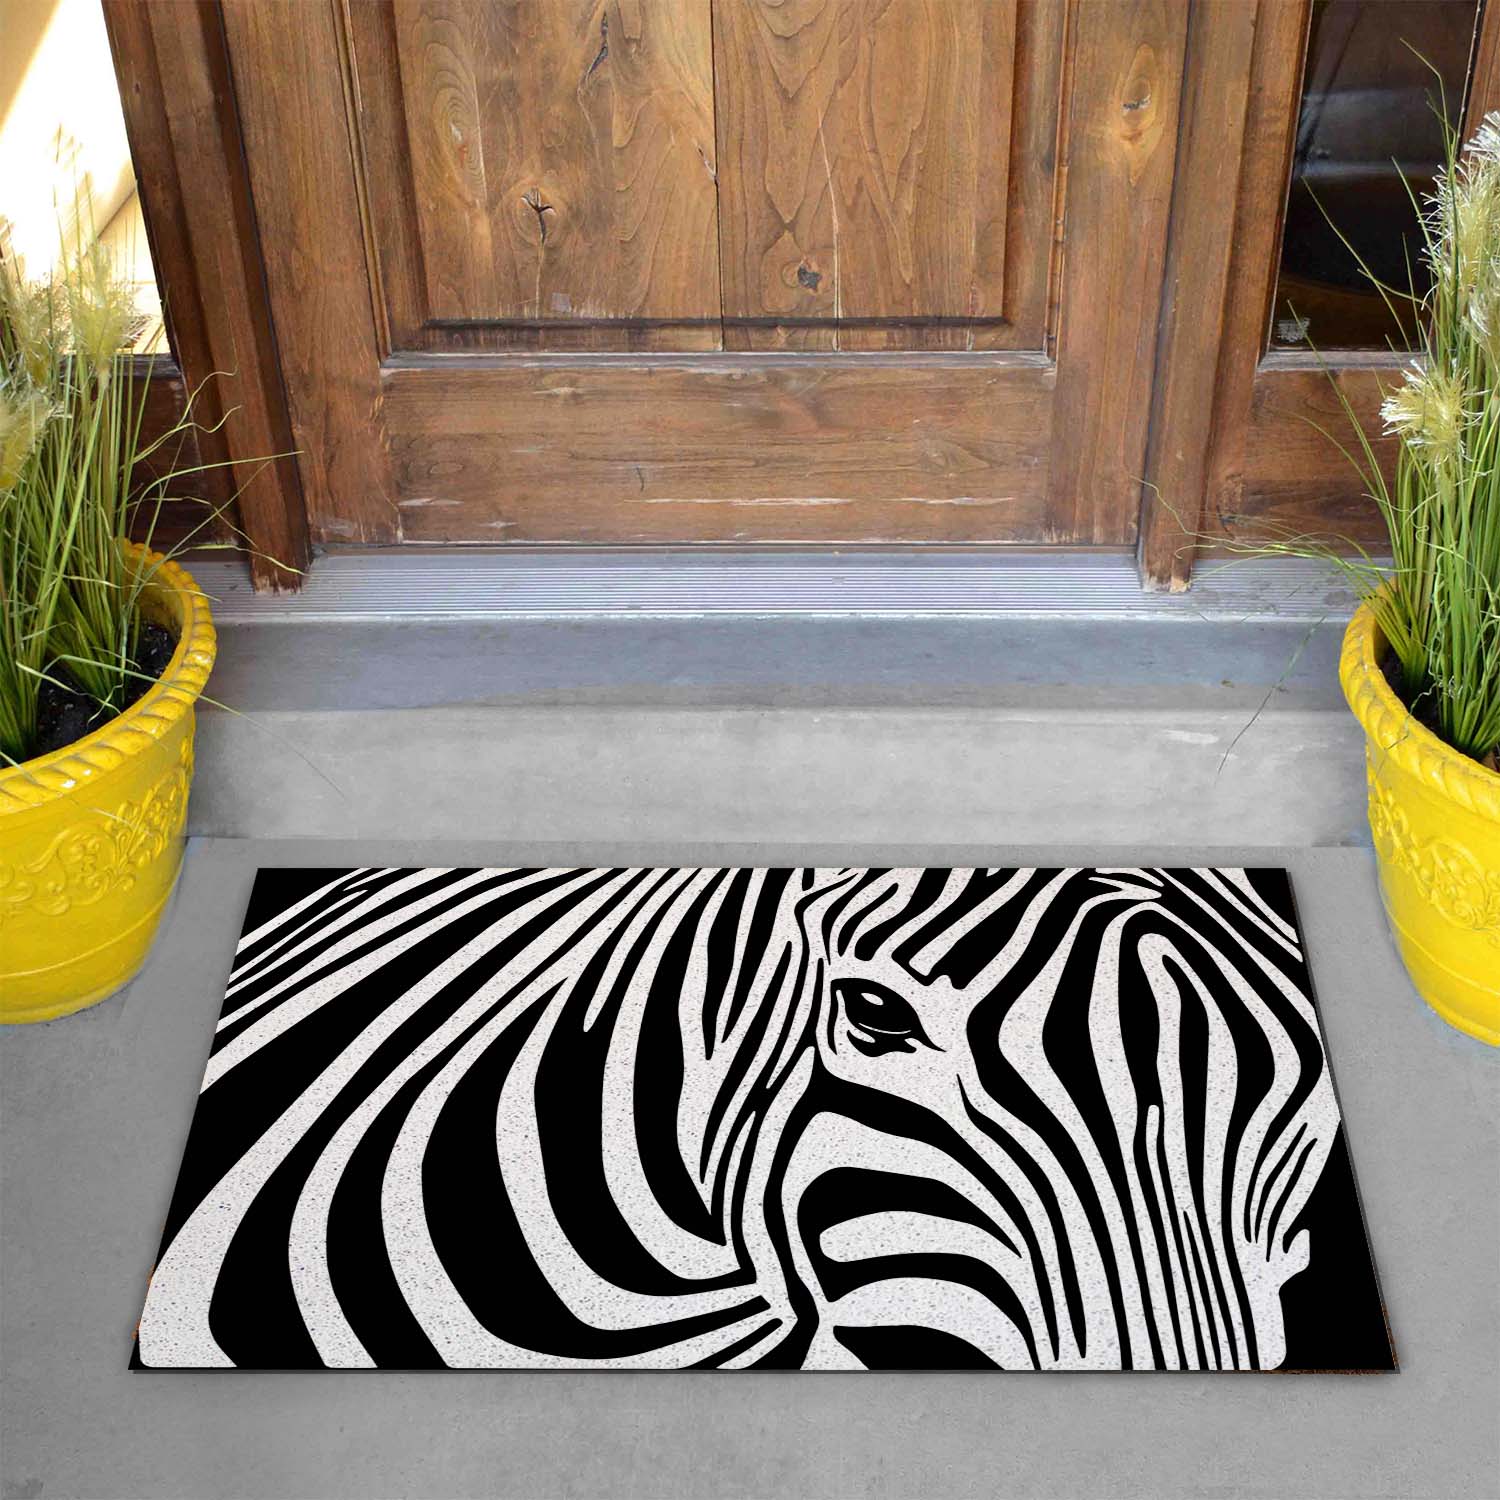 Feblilac Zebra Black And White PVC Coil Door Mat